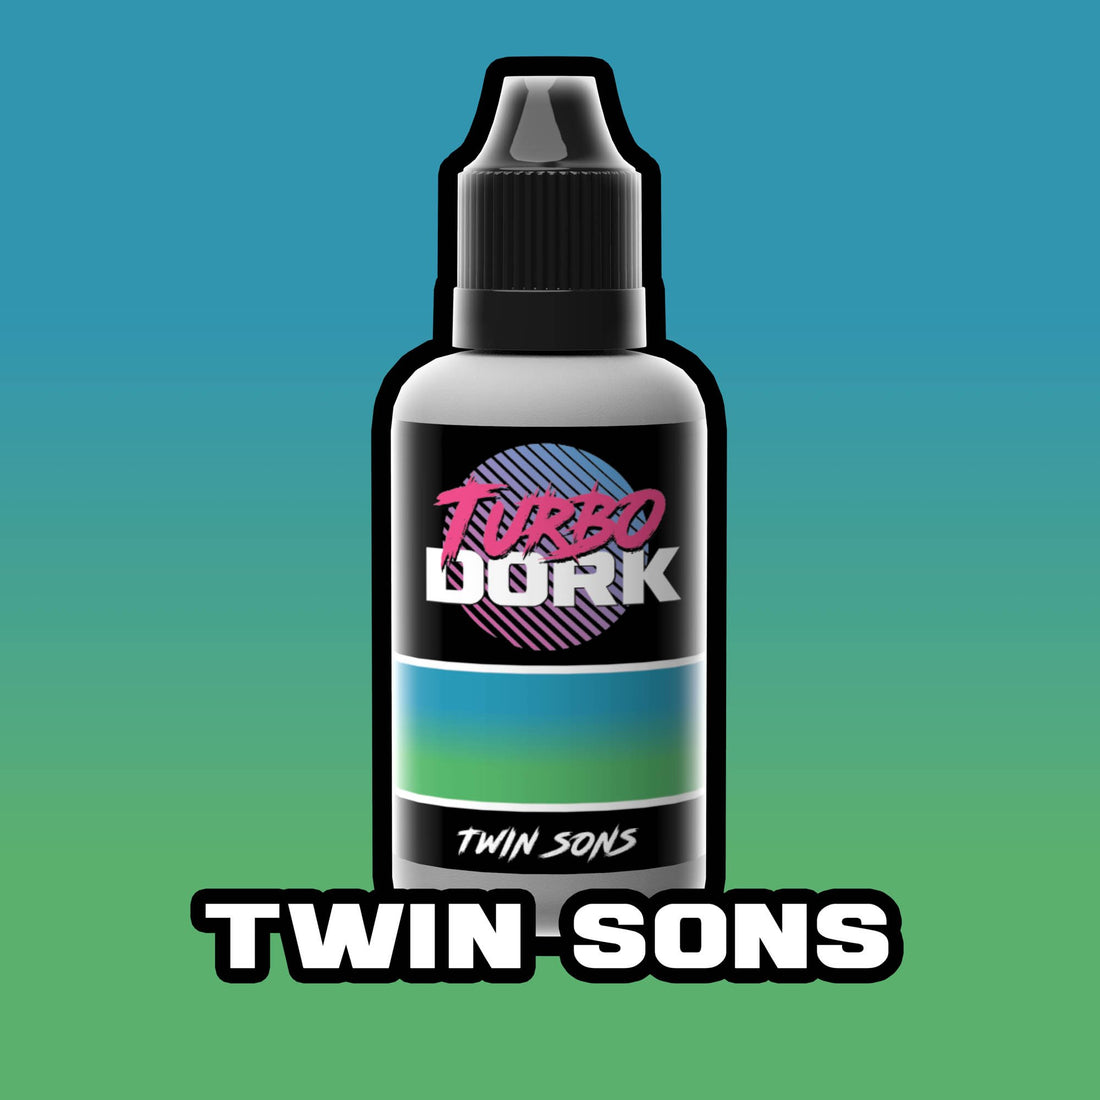 Turbodork Paint: Twin Sons Turboshift